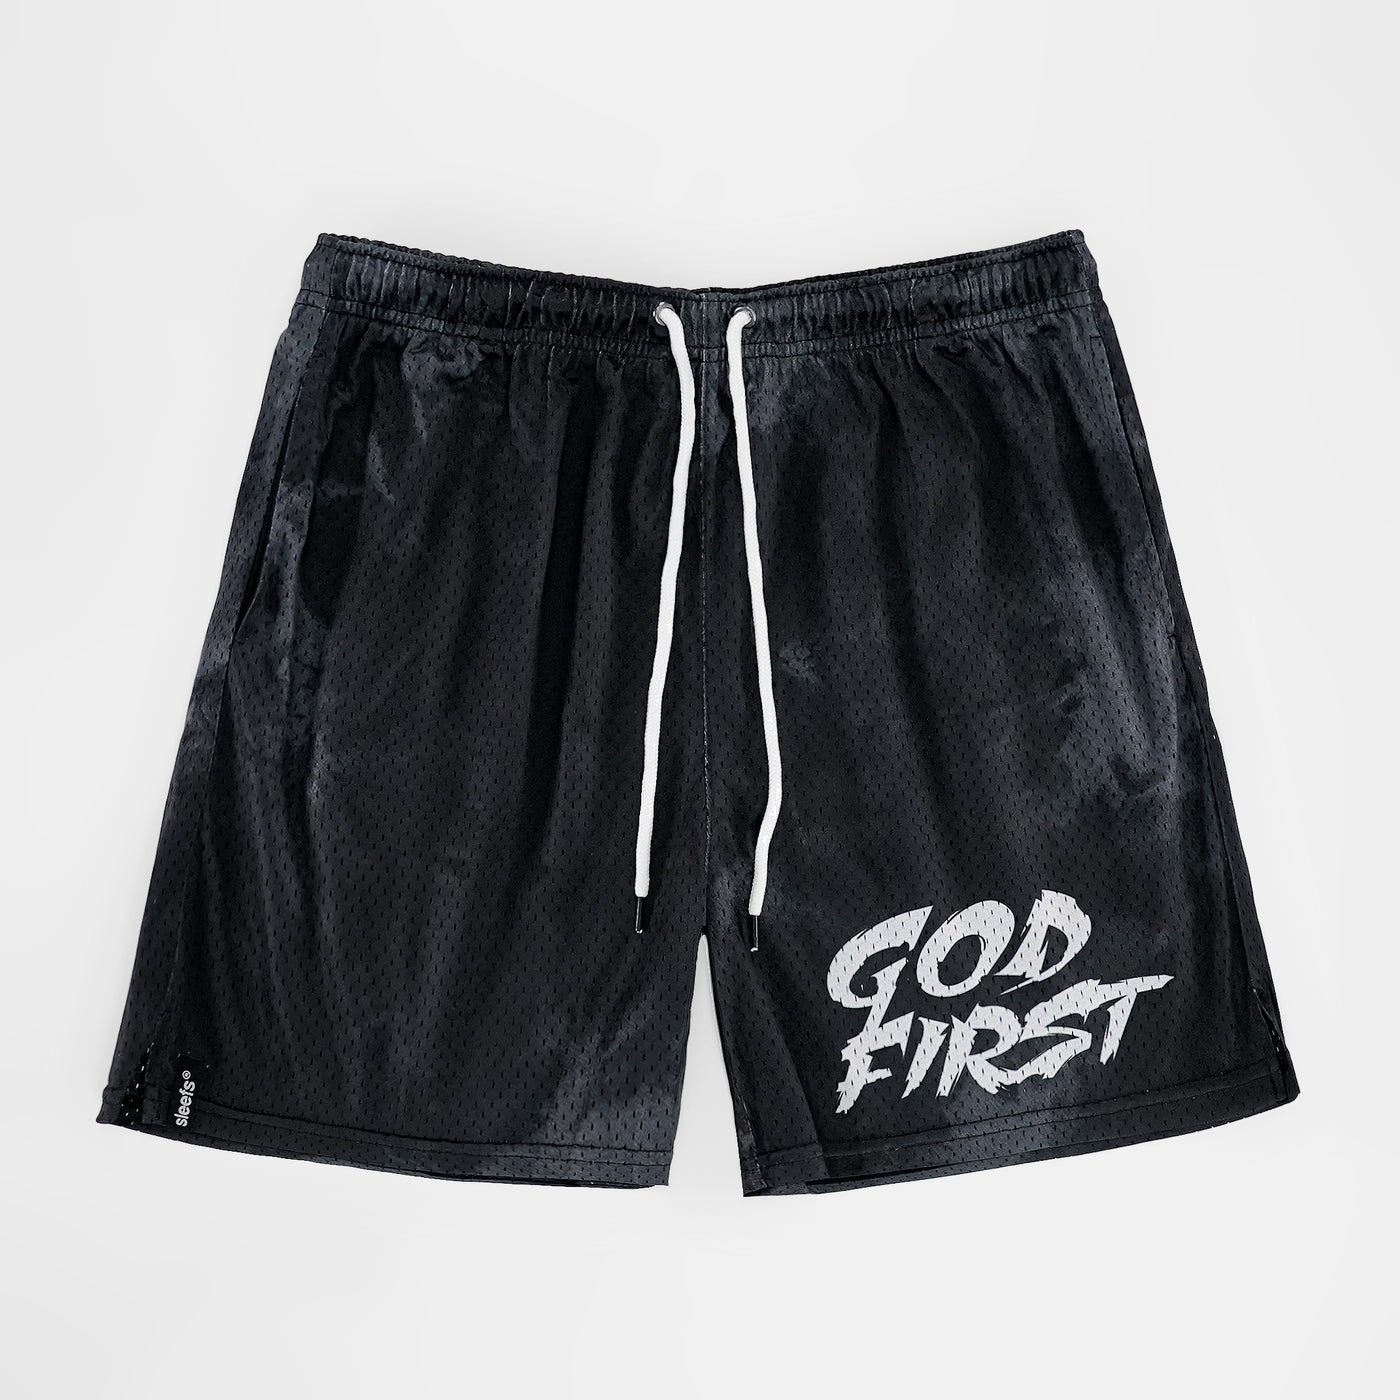 God First Black Shorts - Big - 7"